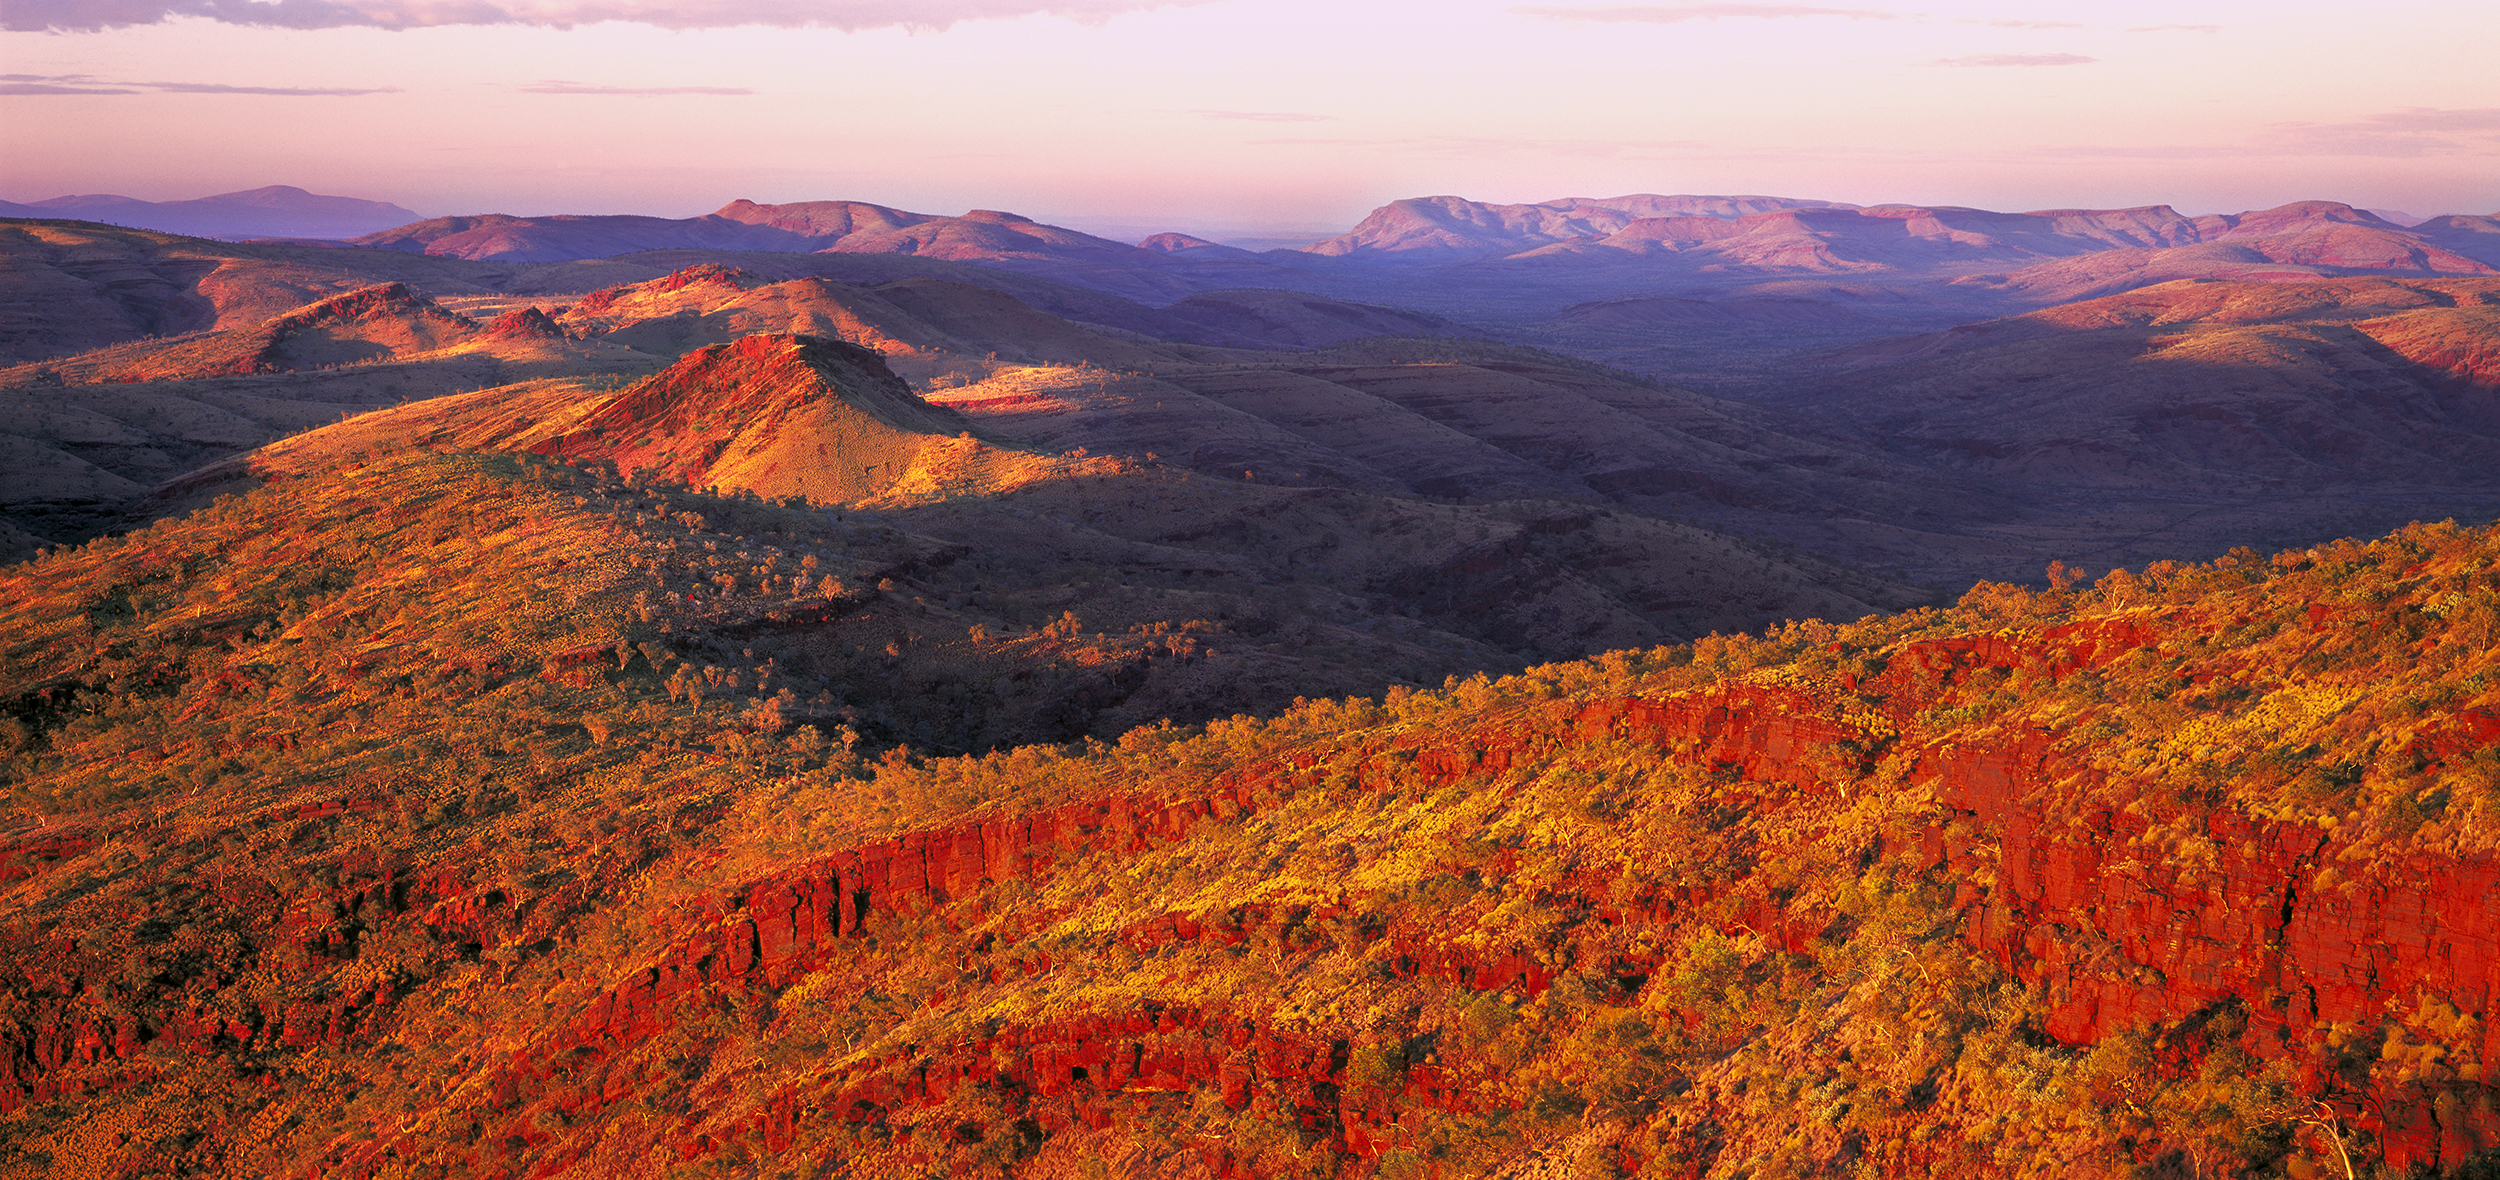  View Looking West from Mt Sheila, Hamersley Range, Western Australia, 2015.&nbsp; Edition of 3. 